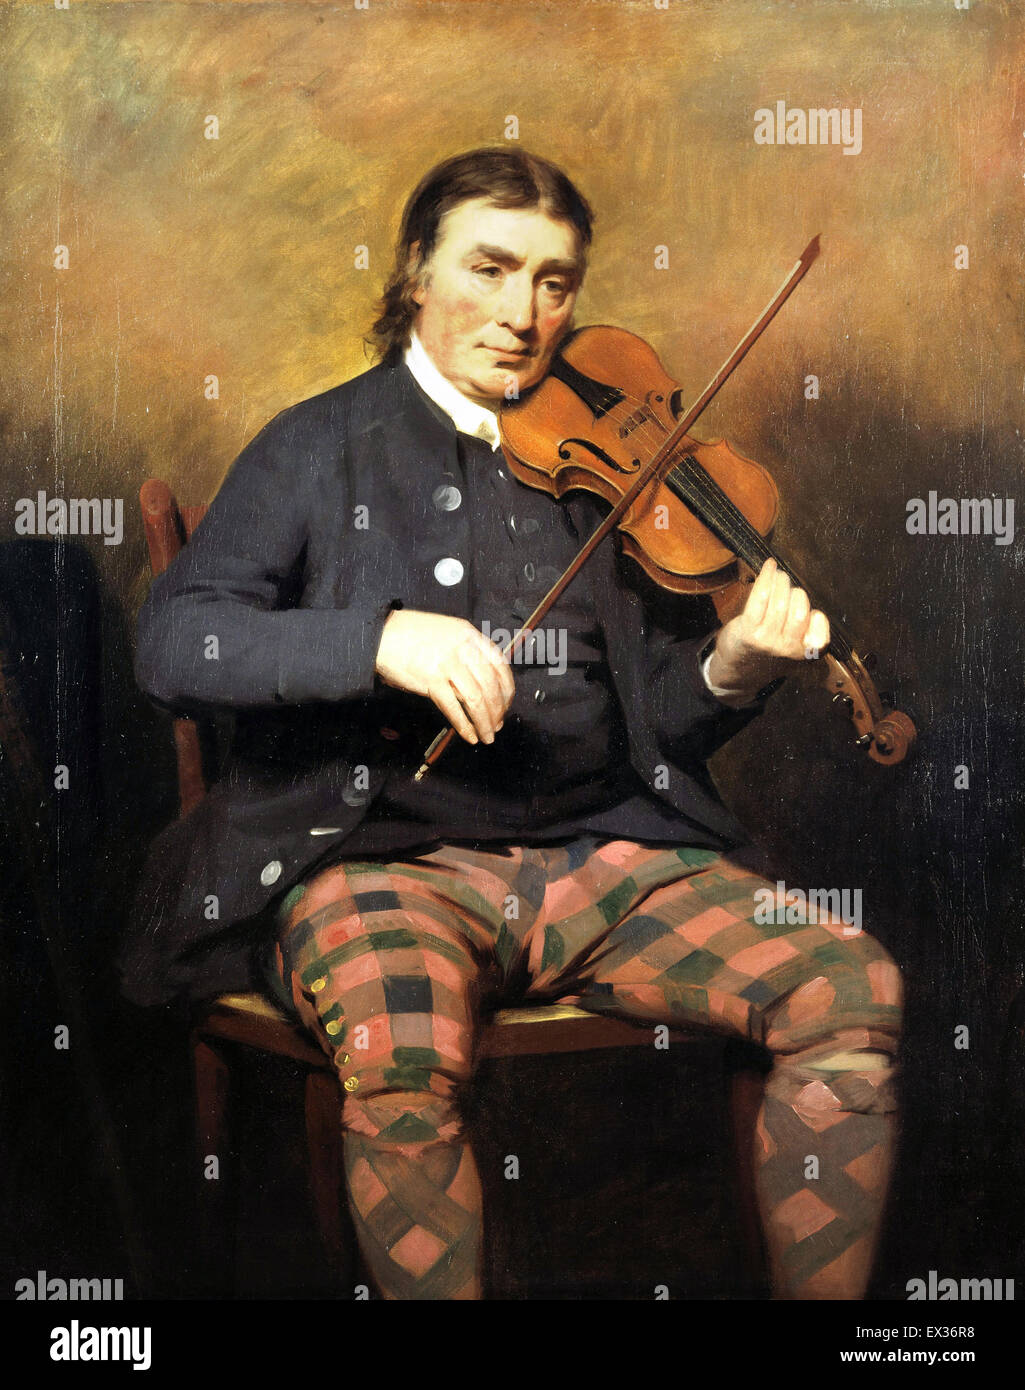 Henry Raeburn, Niel Gow, 1727-1807. Violinist and Composer. 1787 Oil on canvas. National Gallery of Scotland, Edinburgh Scotland Stock Photo